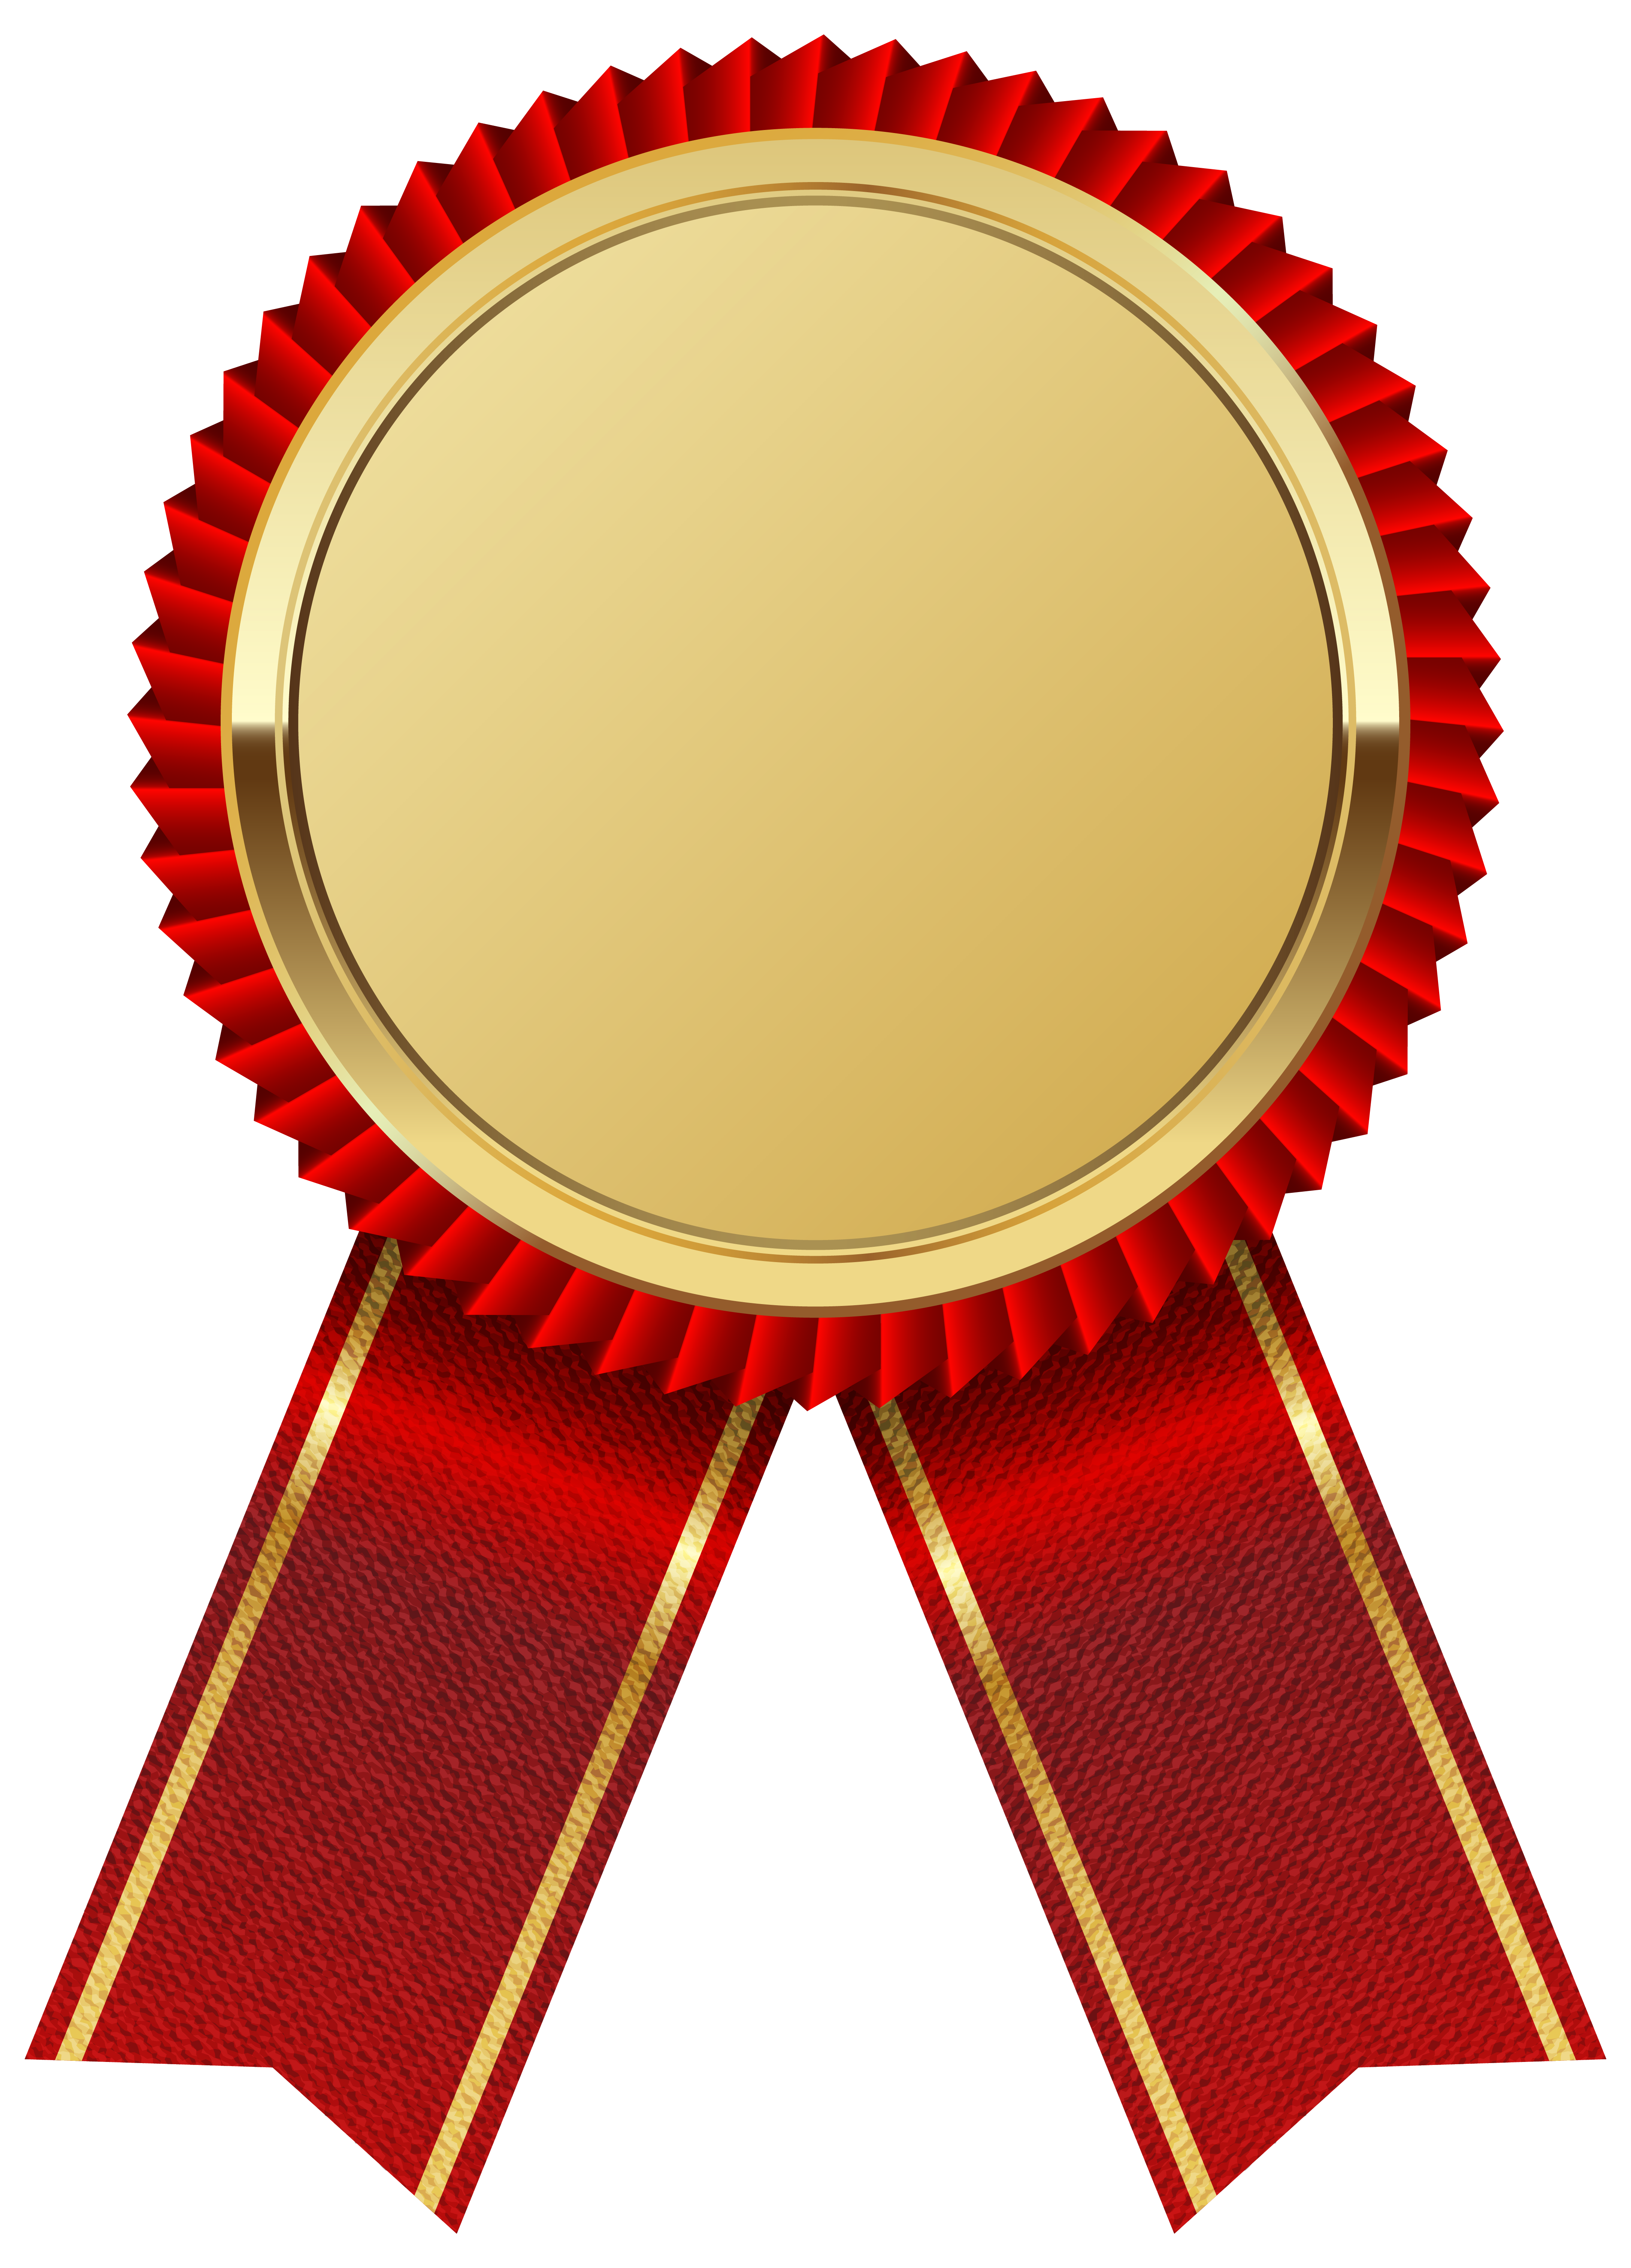 Gold Medal Clipart - Tumundografico